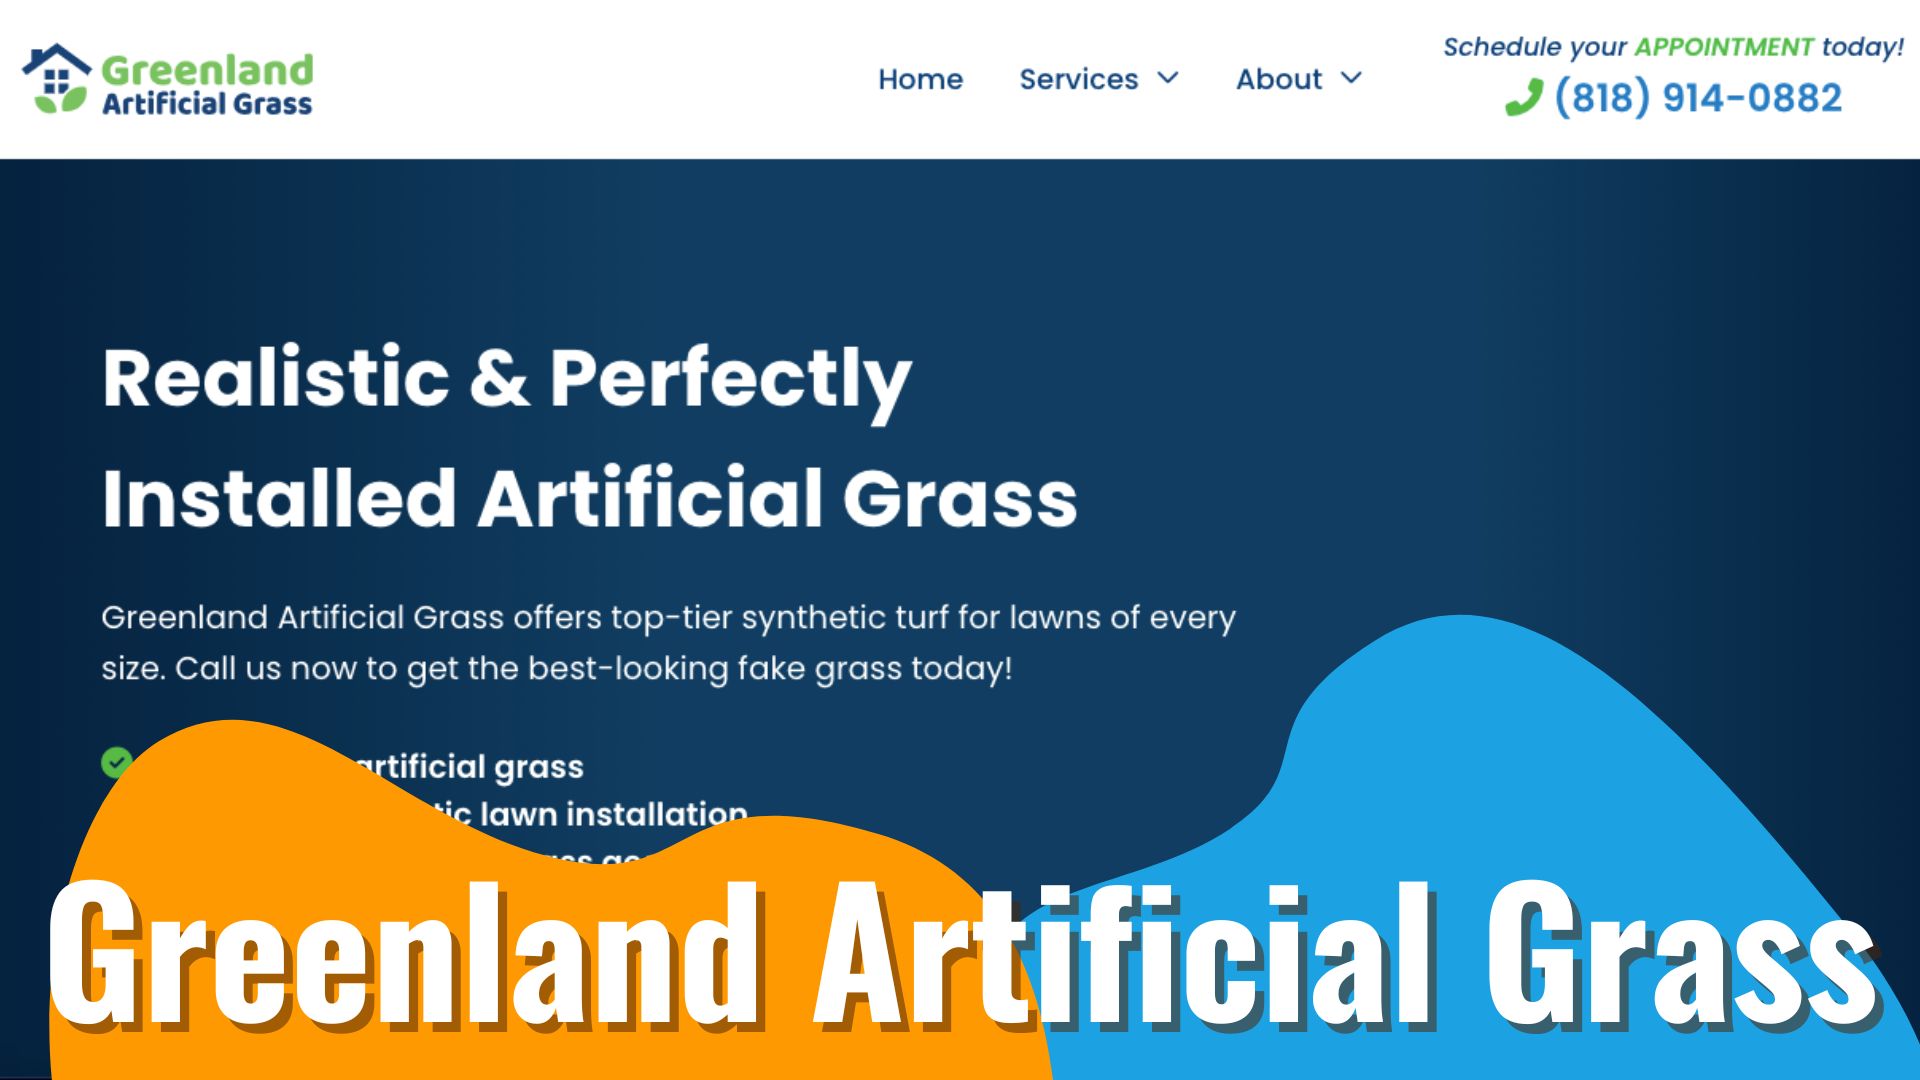 Greenland Artificial Grass Studio City